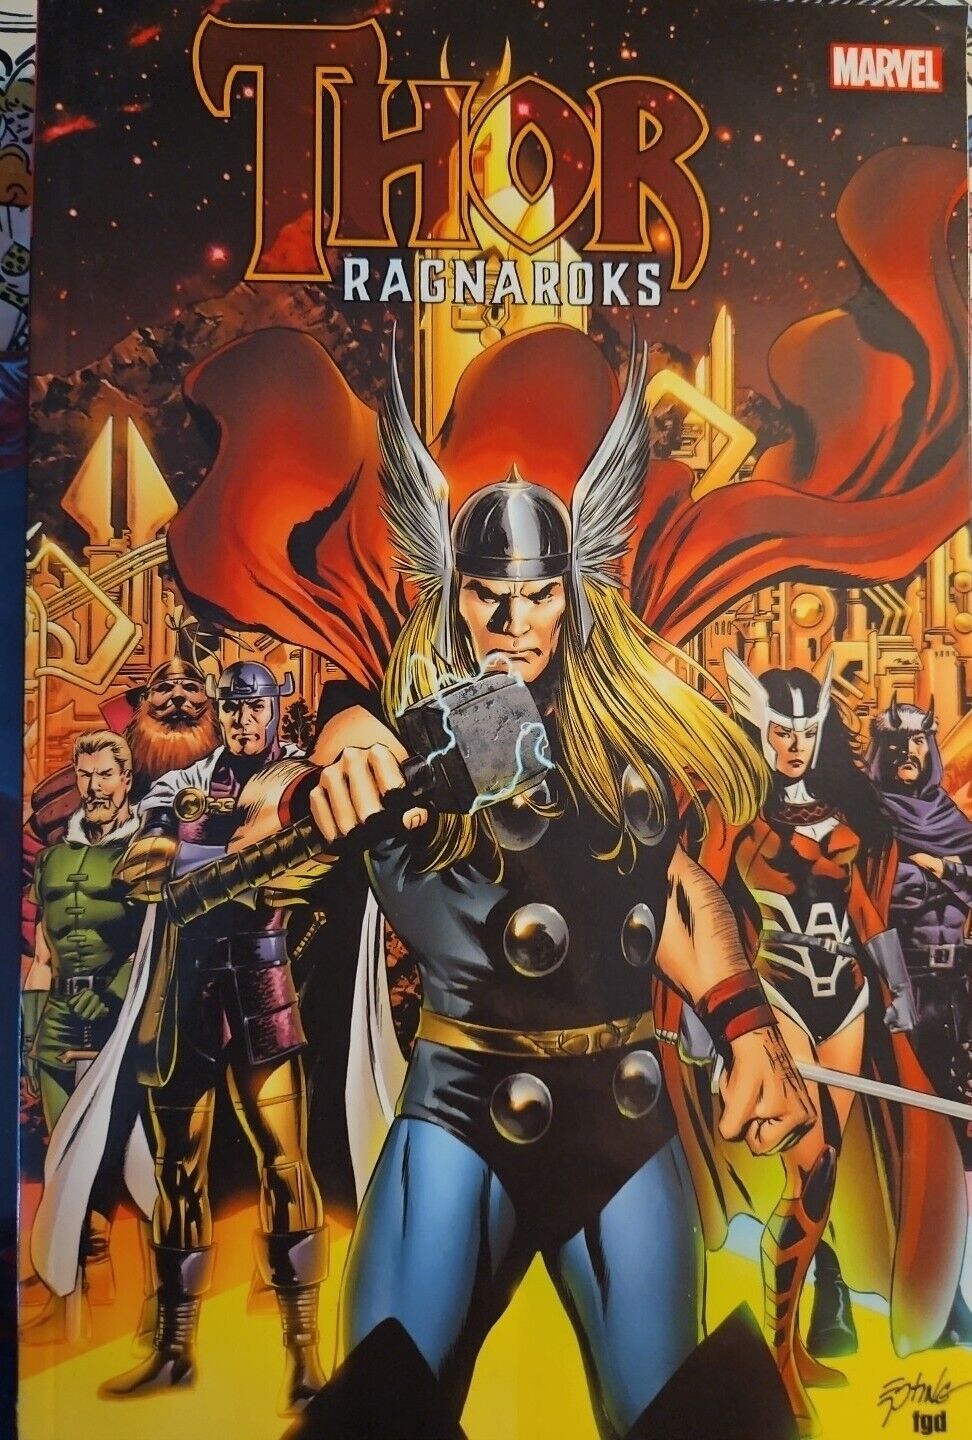 Thor: Ragnaroks (Marvel, 2017)